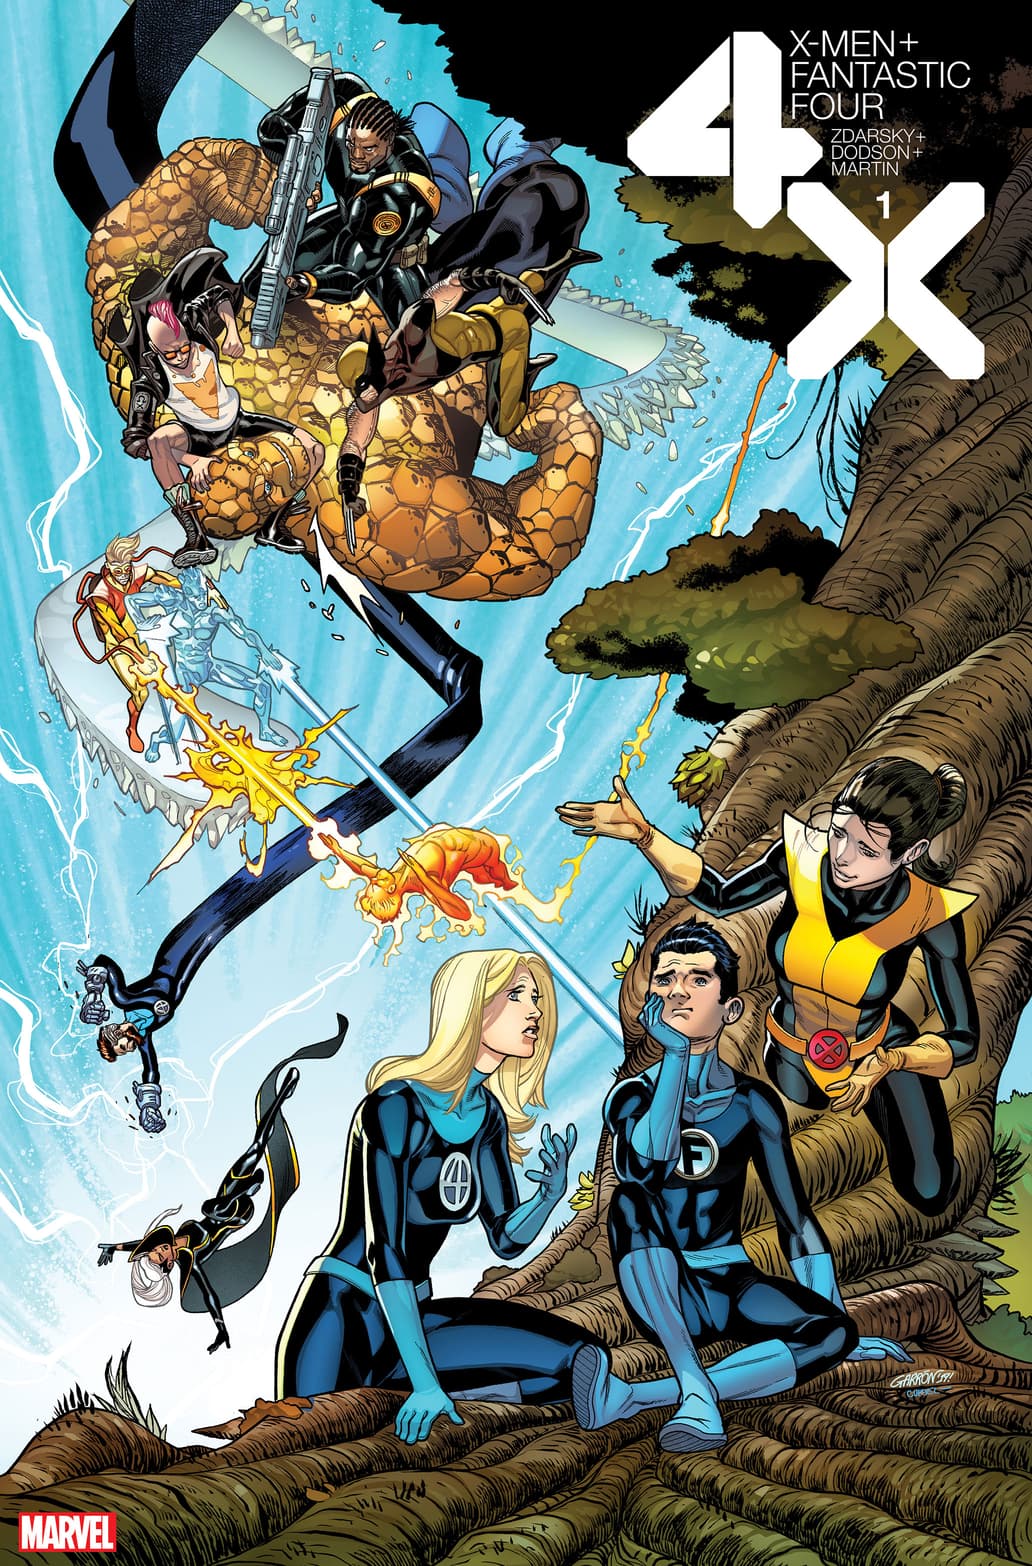 X-MEN/FANTASTIC FOUR variant cover by Javier Garron